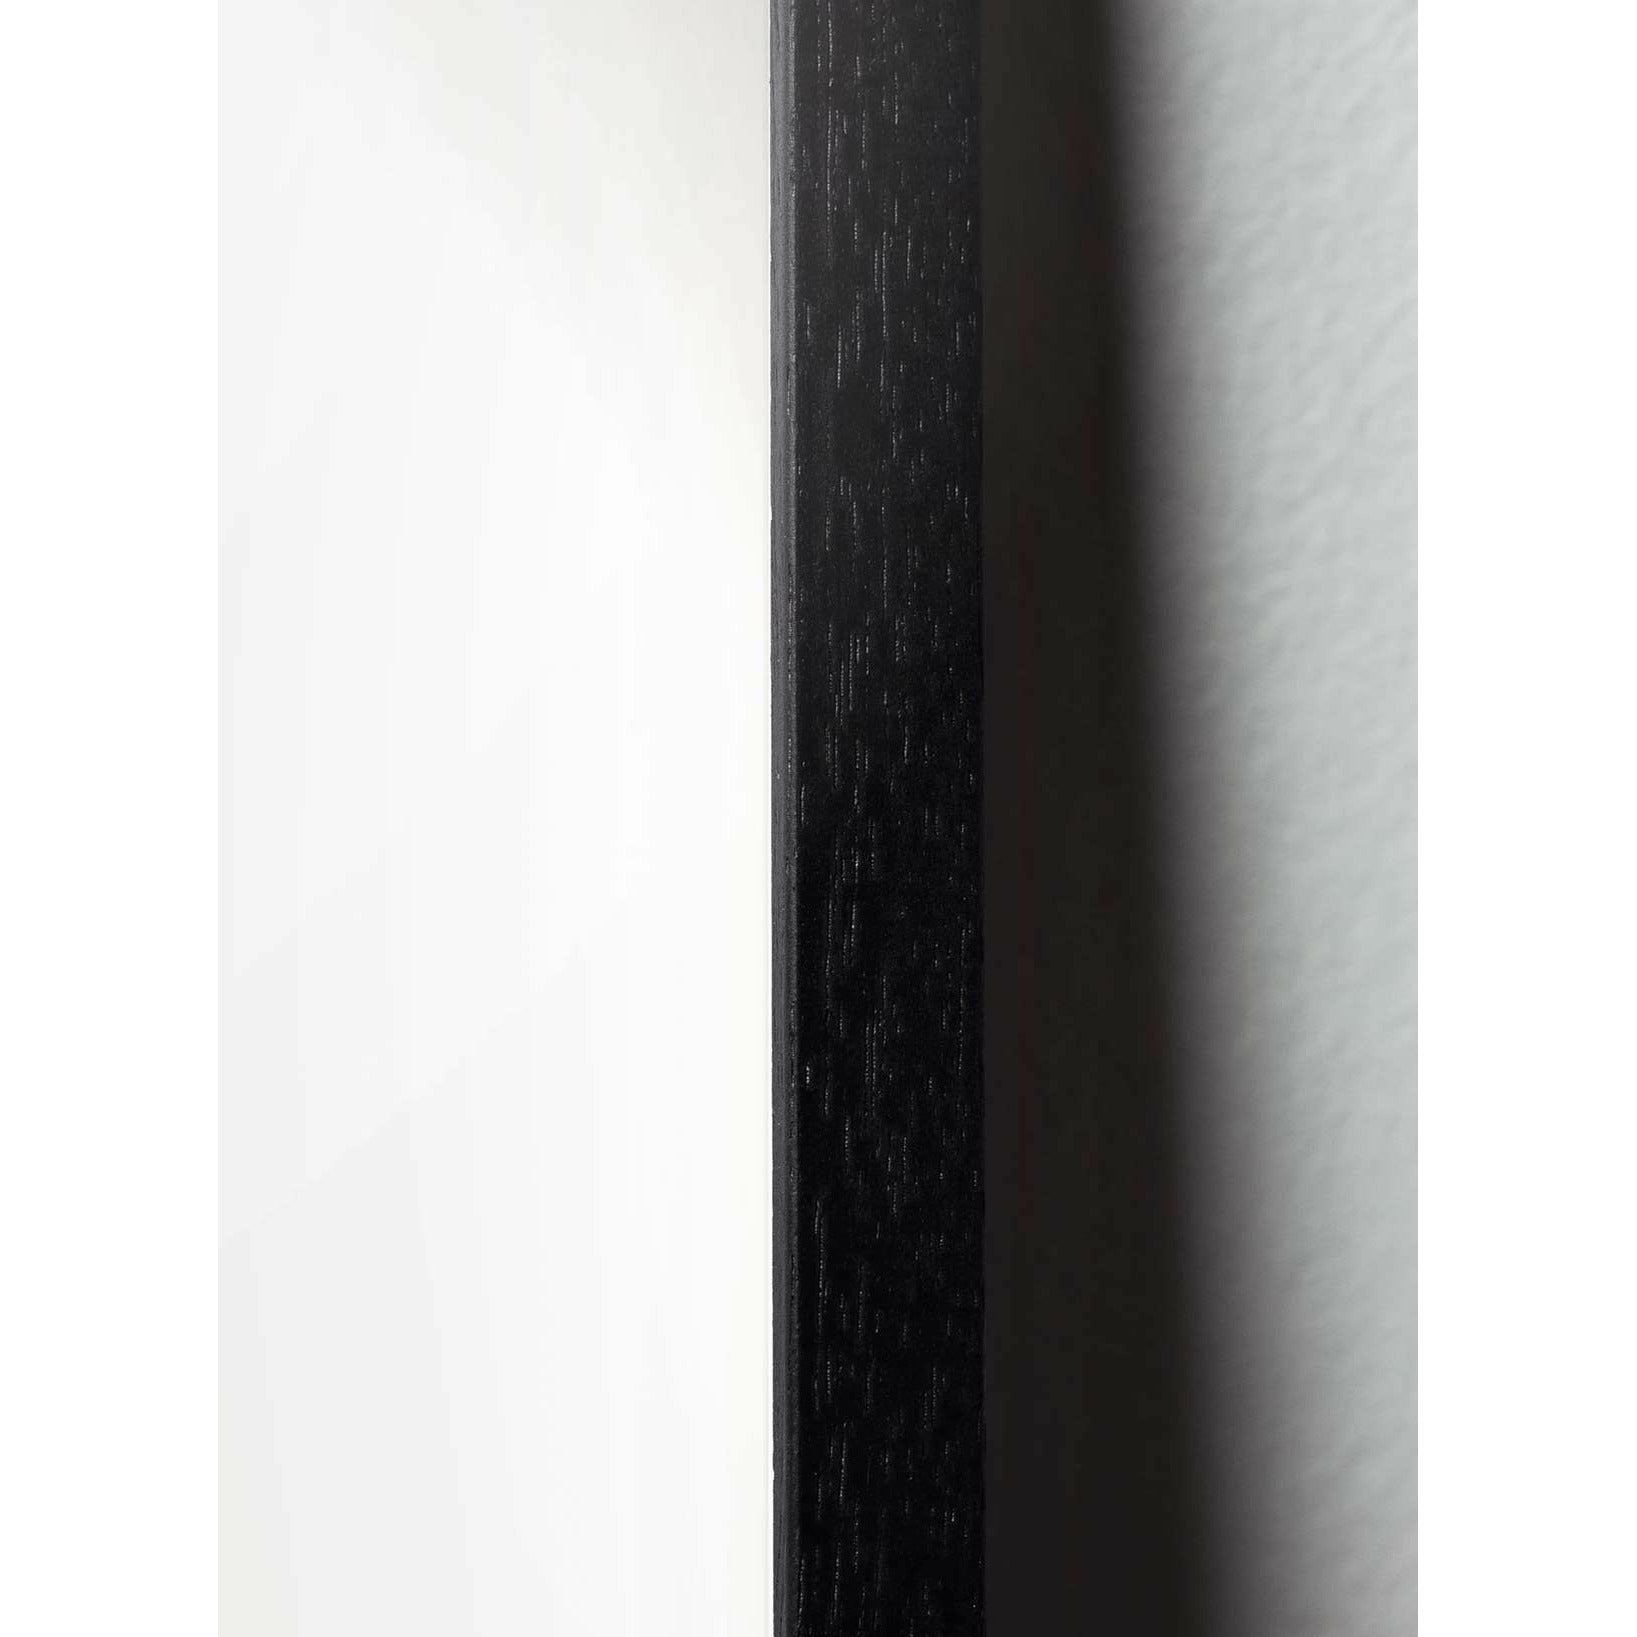 Brainchild Vintergästdesignikonsaffisch, ram i svart -målat trä 30x40 cm, grå